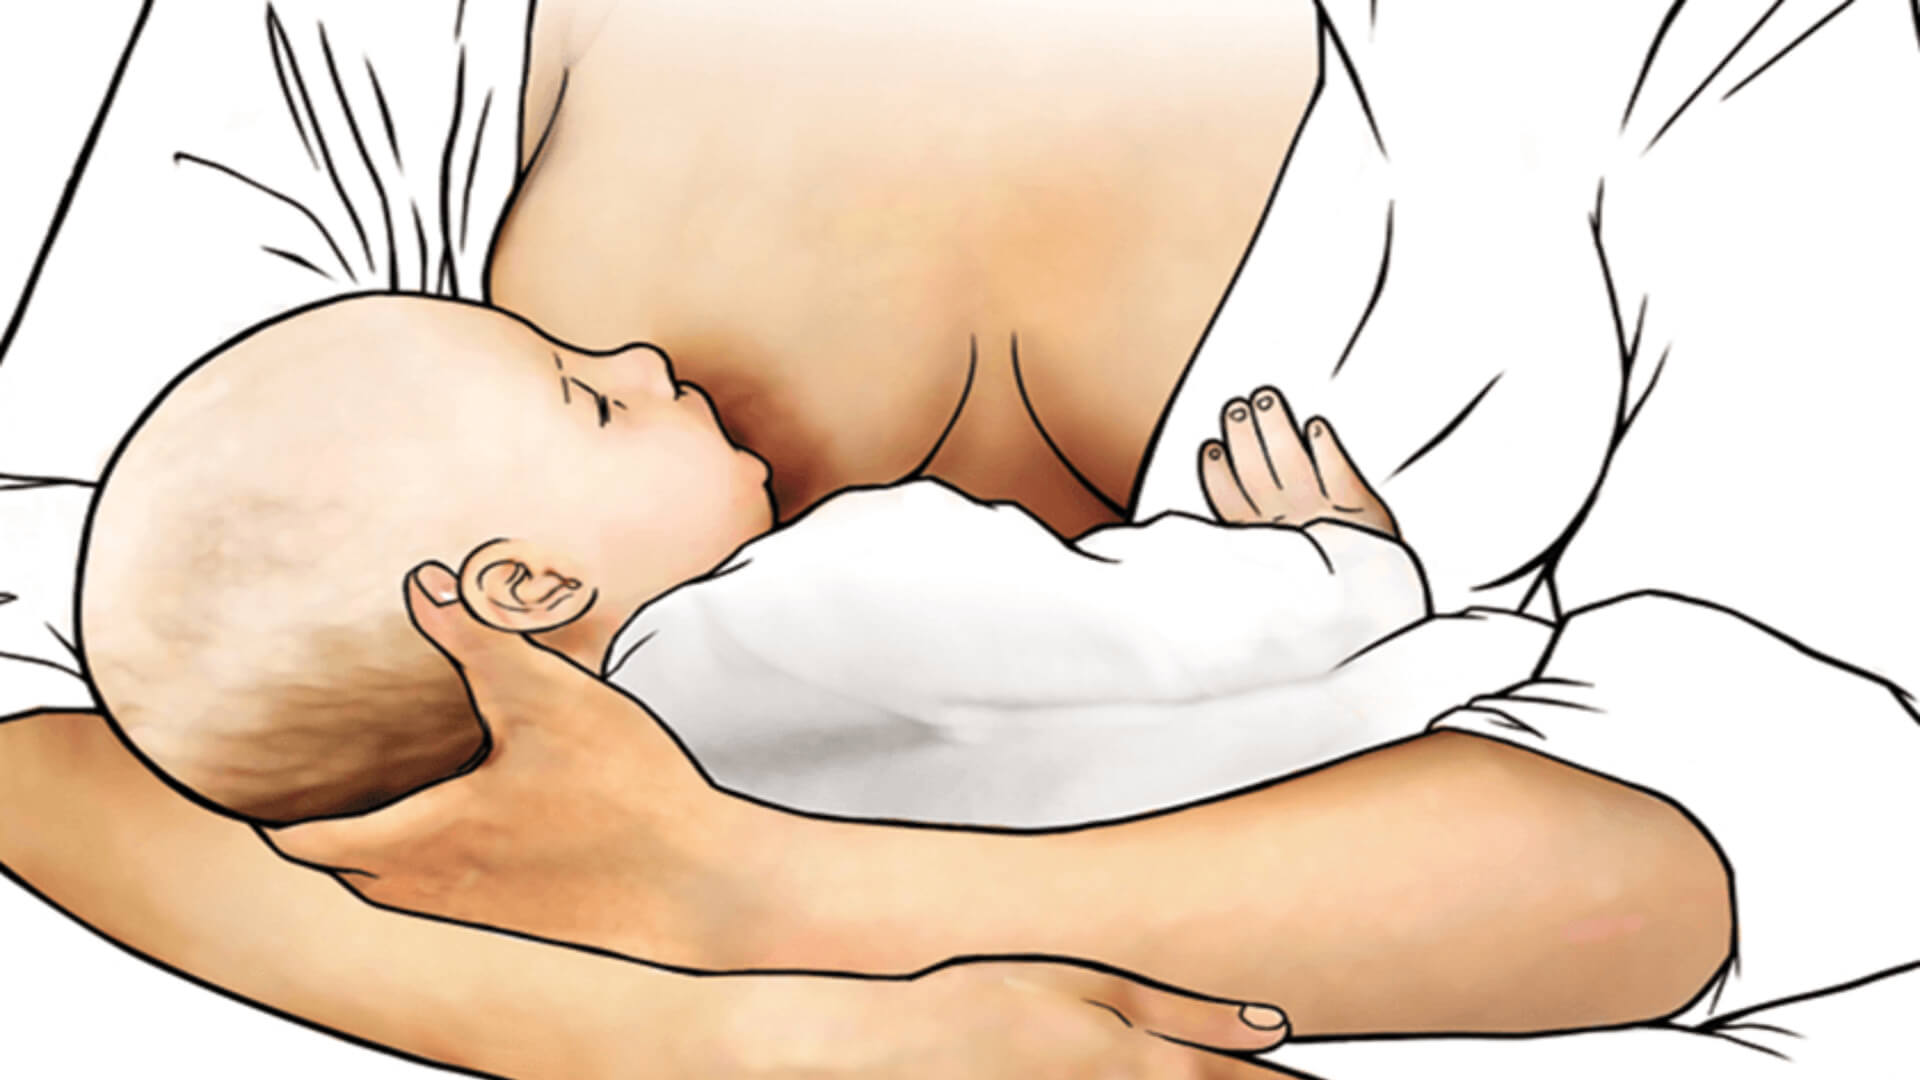 Breastfeeding Techniques